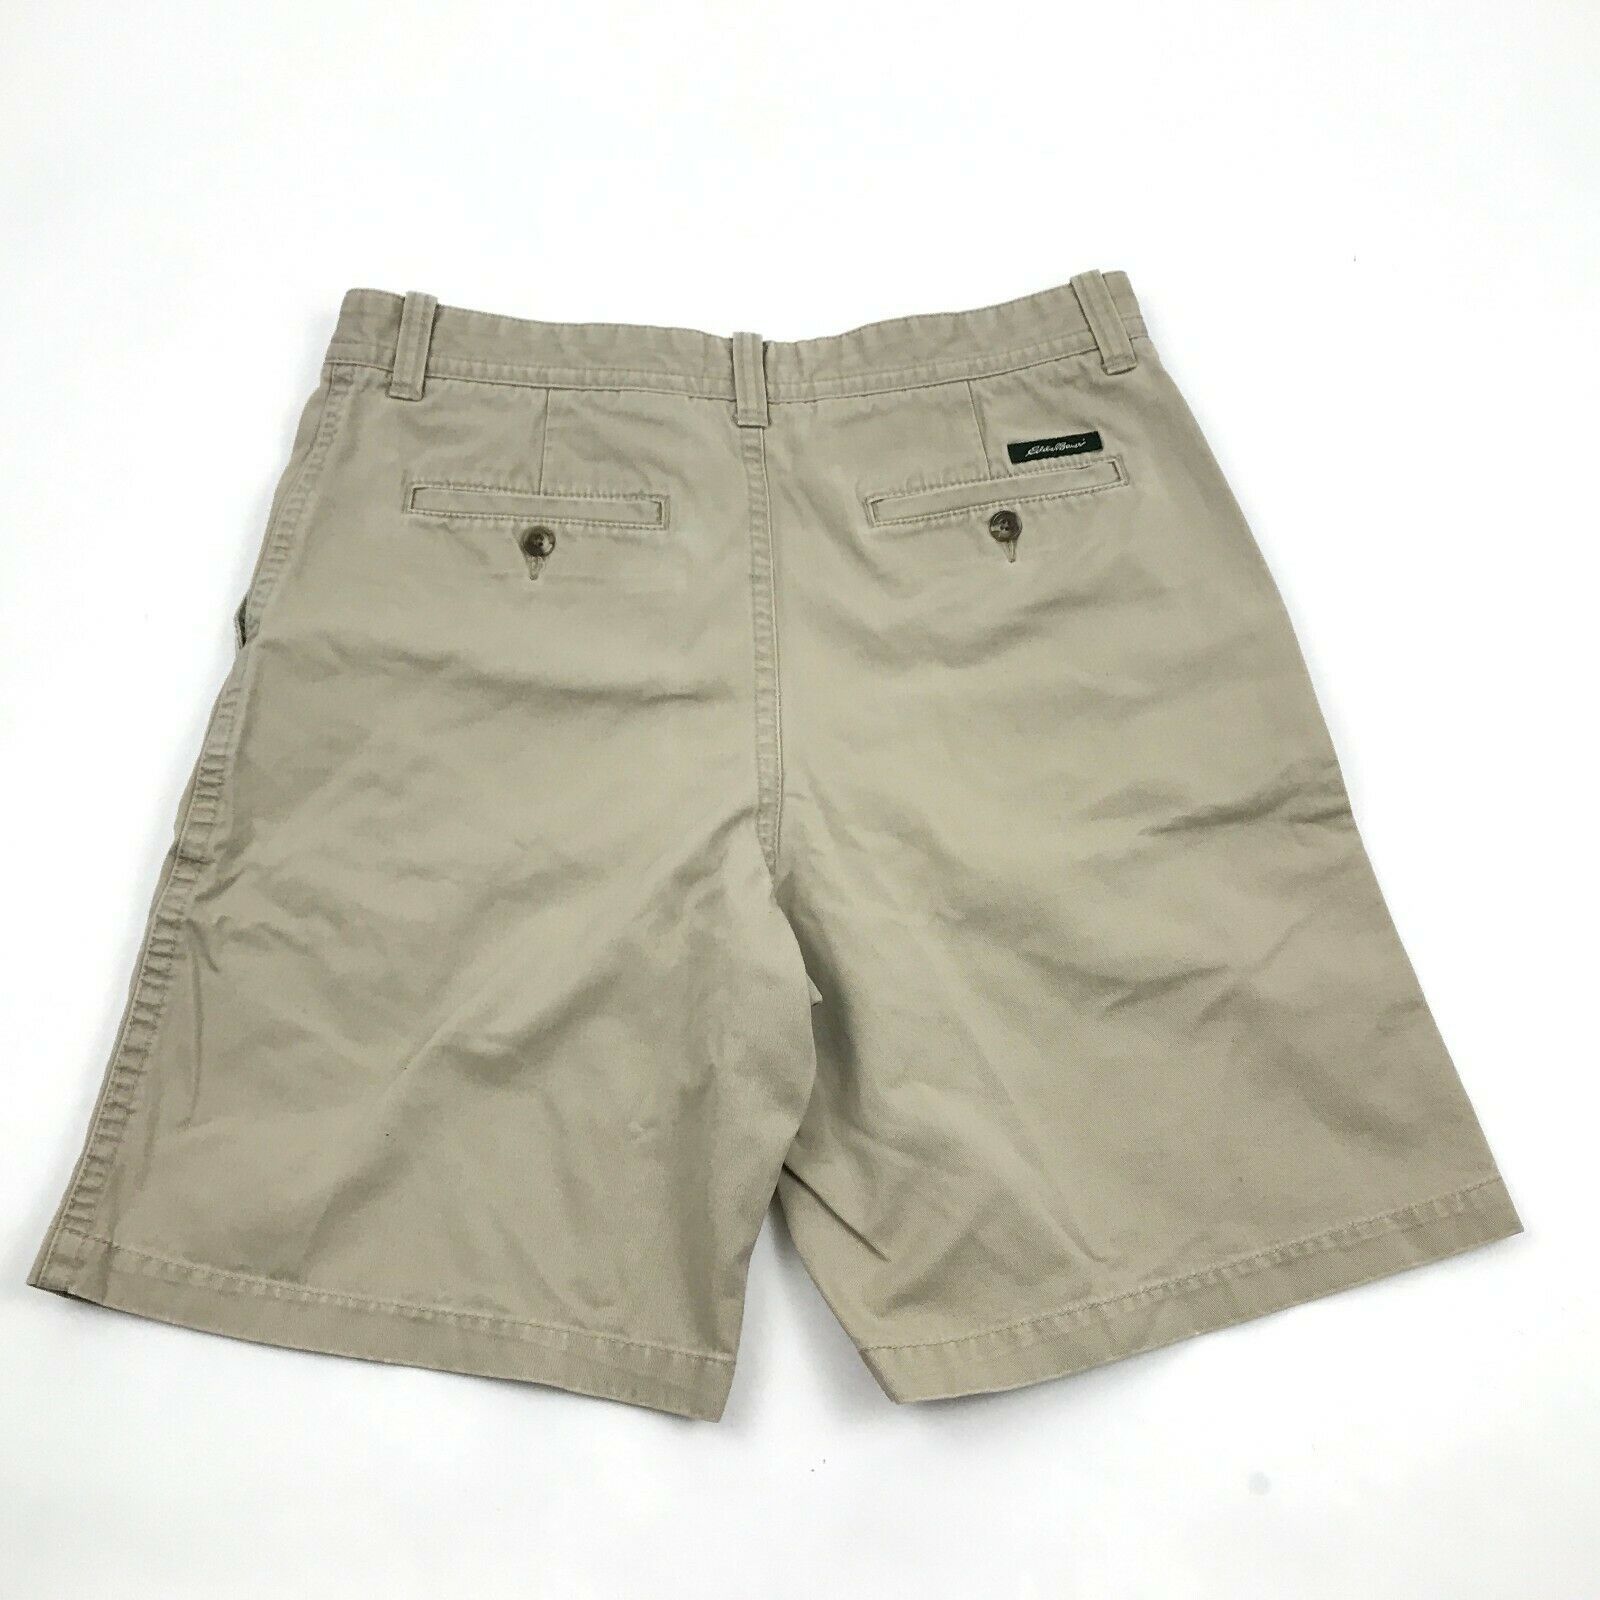 Eddie Bauer Chino Shorts Mens Size 32 Waist Khaki Tan Flat Front Sand ...